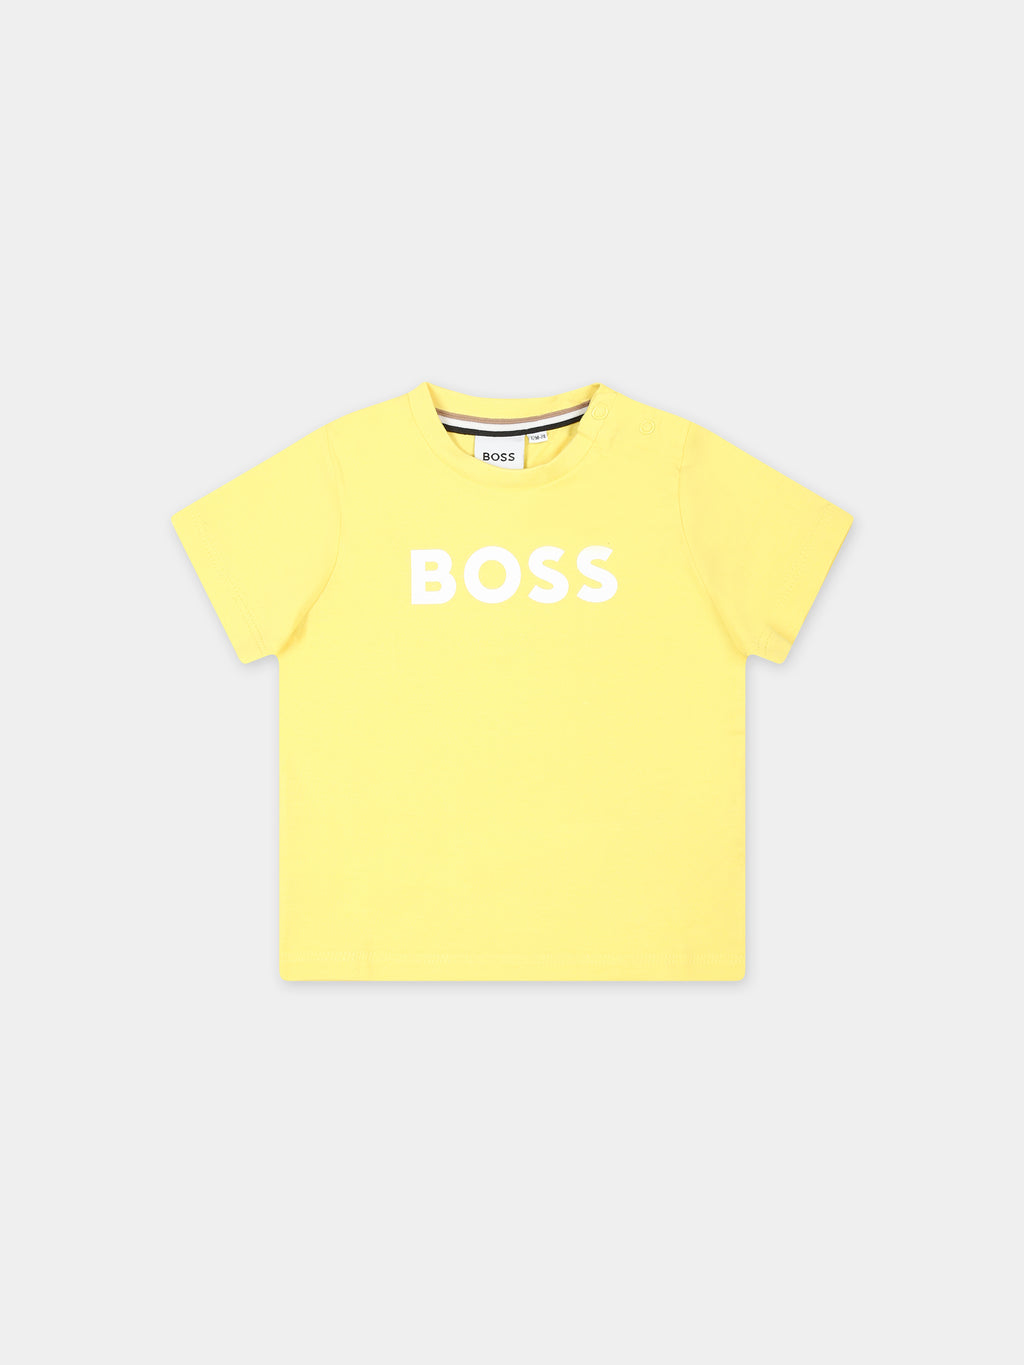 T-shirt jaune pour bébé garçon aveclogo